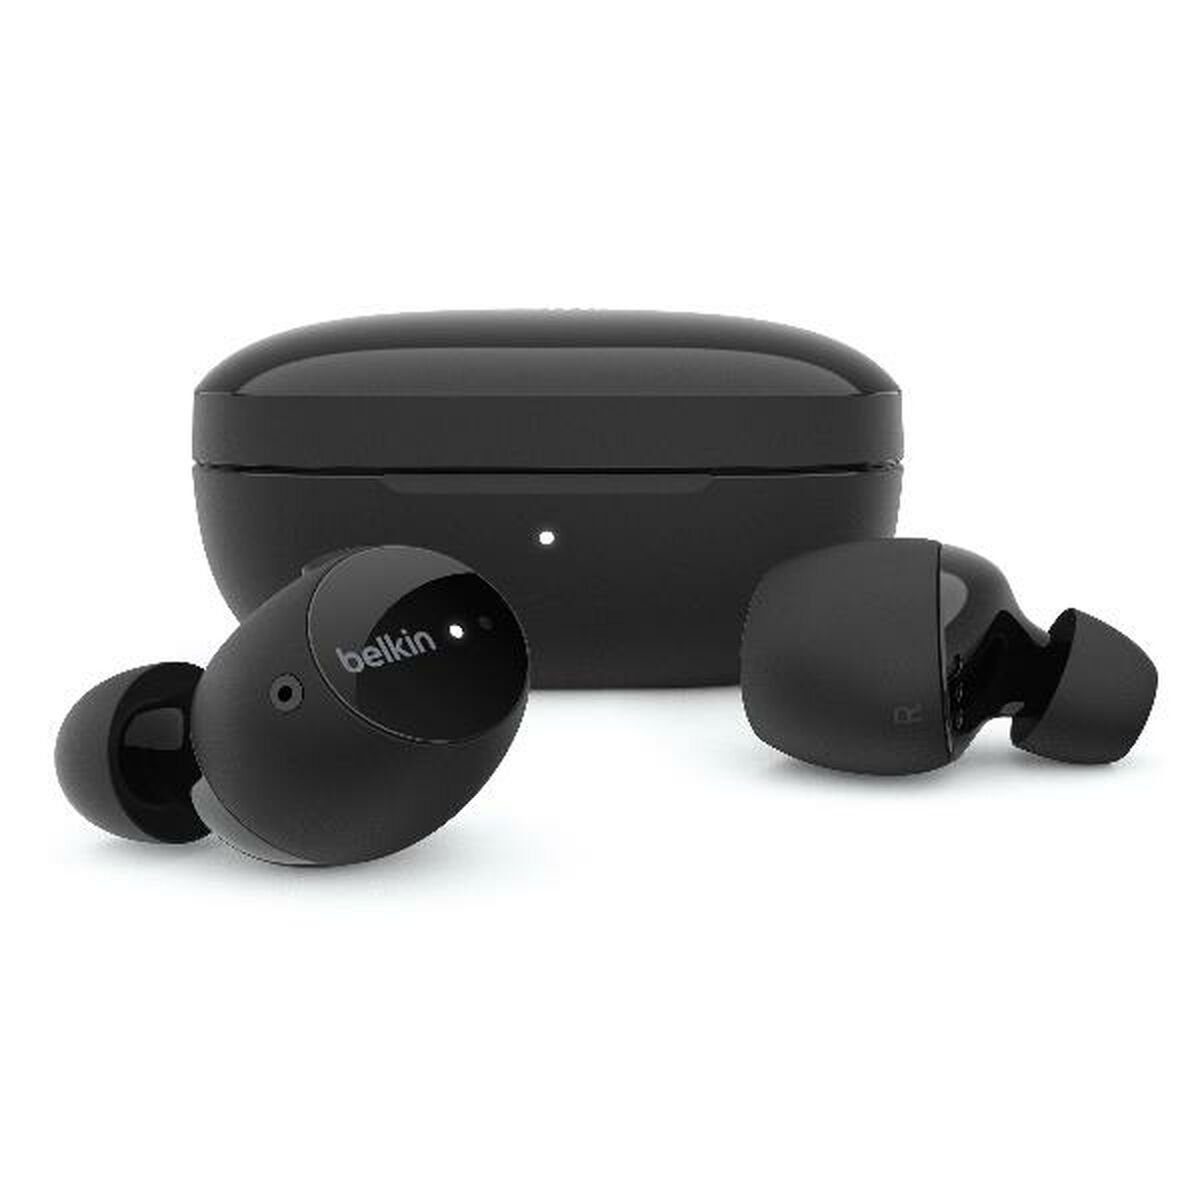 Belkin Kopfhörer mit Mikrofon Belkin Kopfhörer Bluetooth AUC003BTBK schwarz